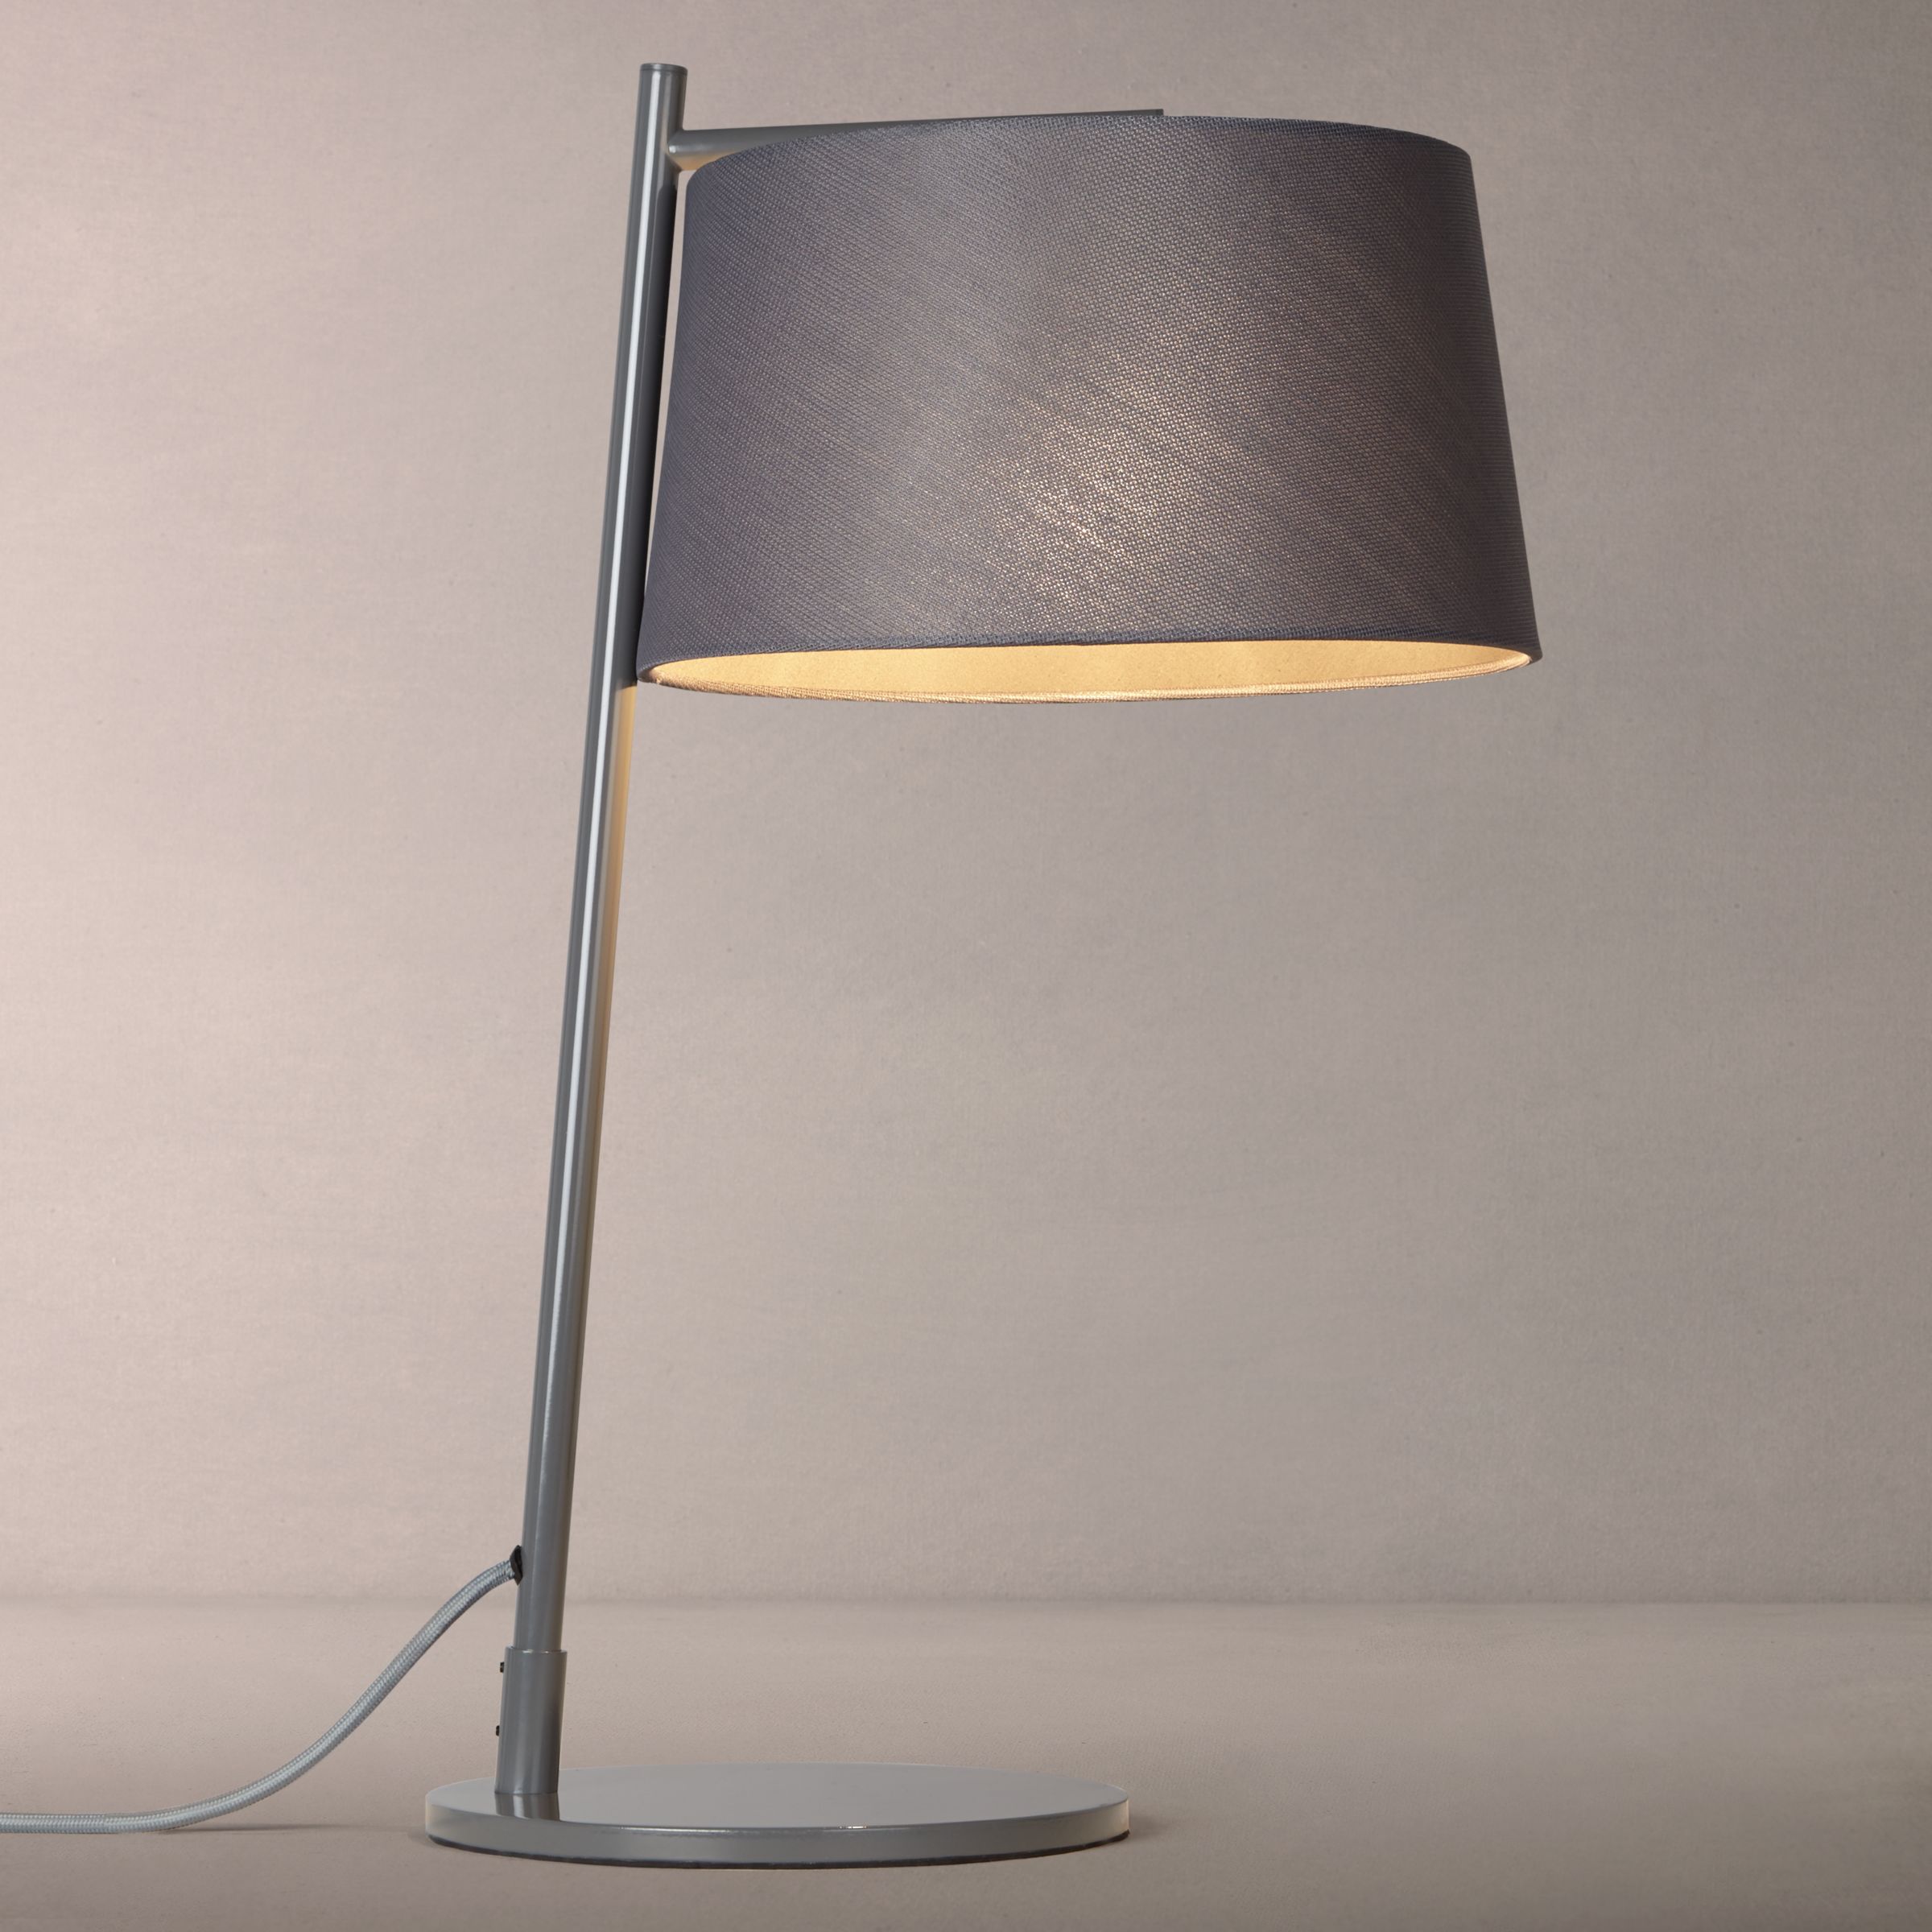 John Lewis & Partners Grayson Woven Shade Table Lamp, Grey